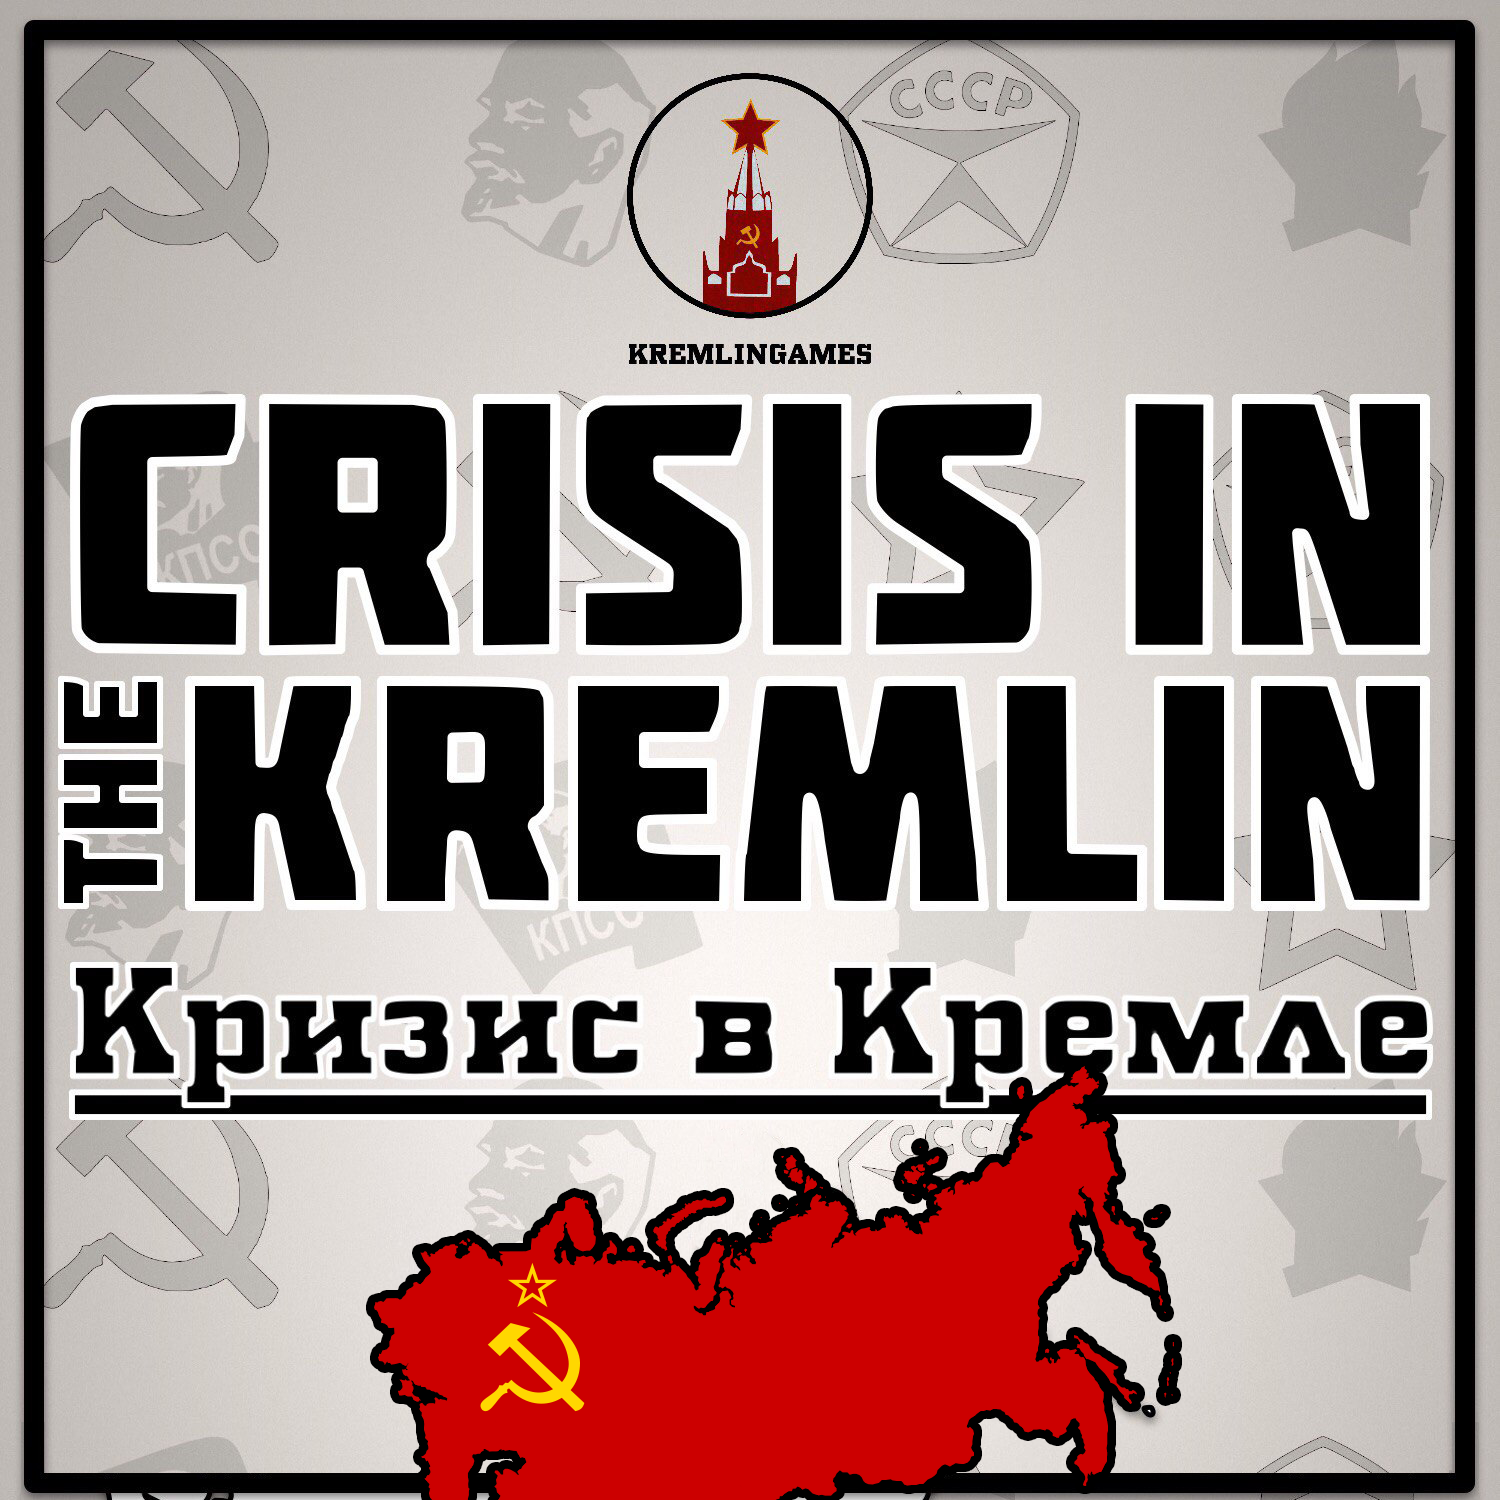 Crisis in the Kremlin игра. Кризис в Кремле. Crisis in the Kremlin 2017. Кризис в Кремле игра 2017. The kremlin has been